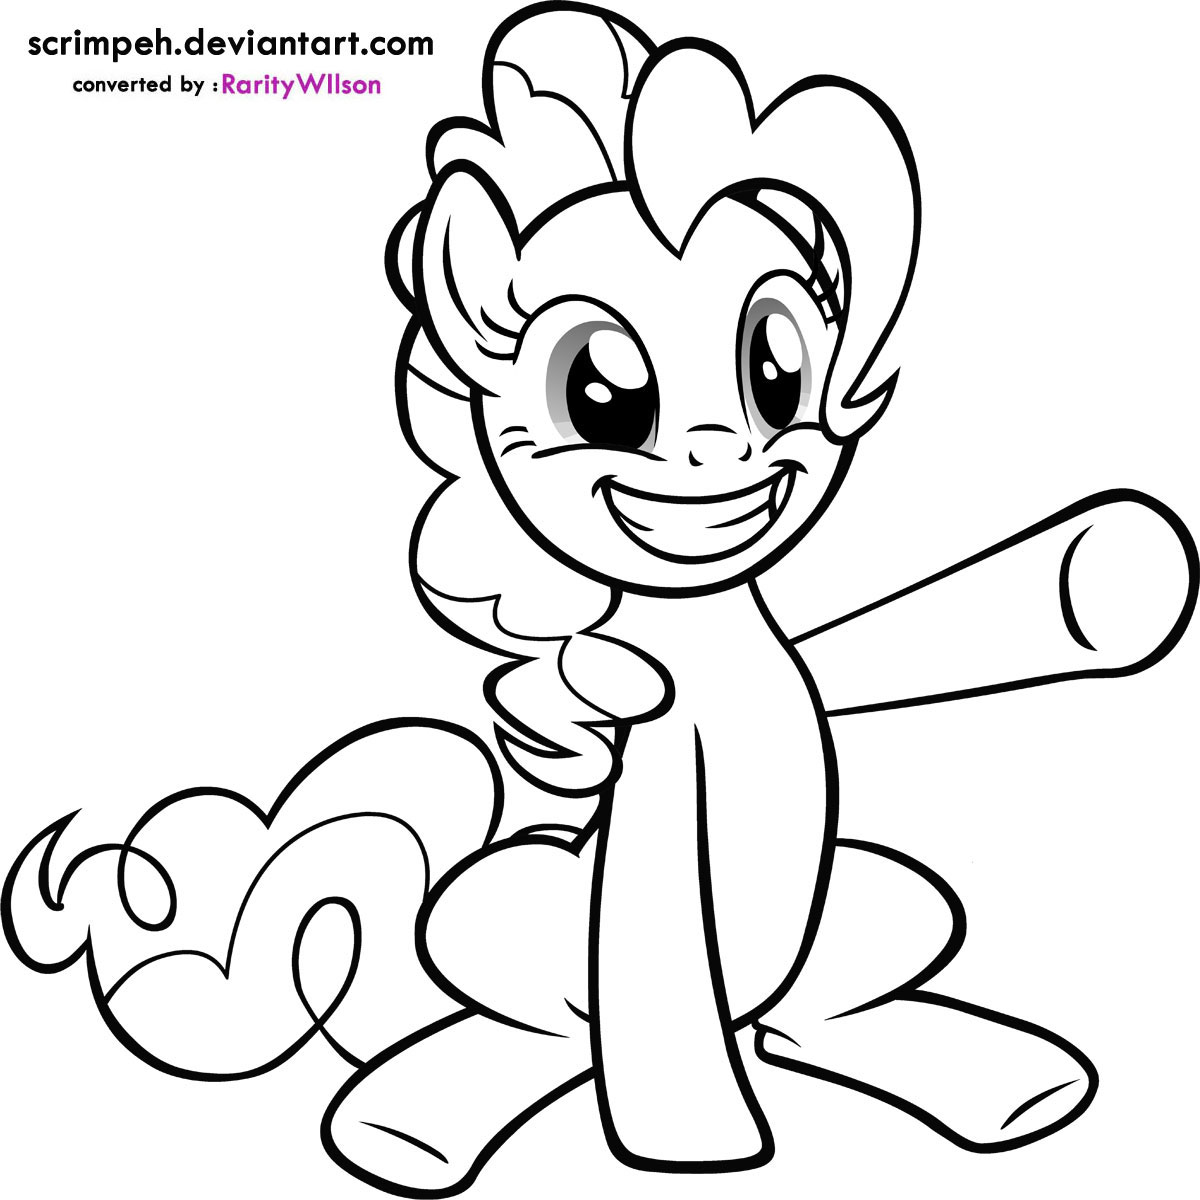 Dibujo para imprimir : Animales - Pony numéro 344908